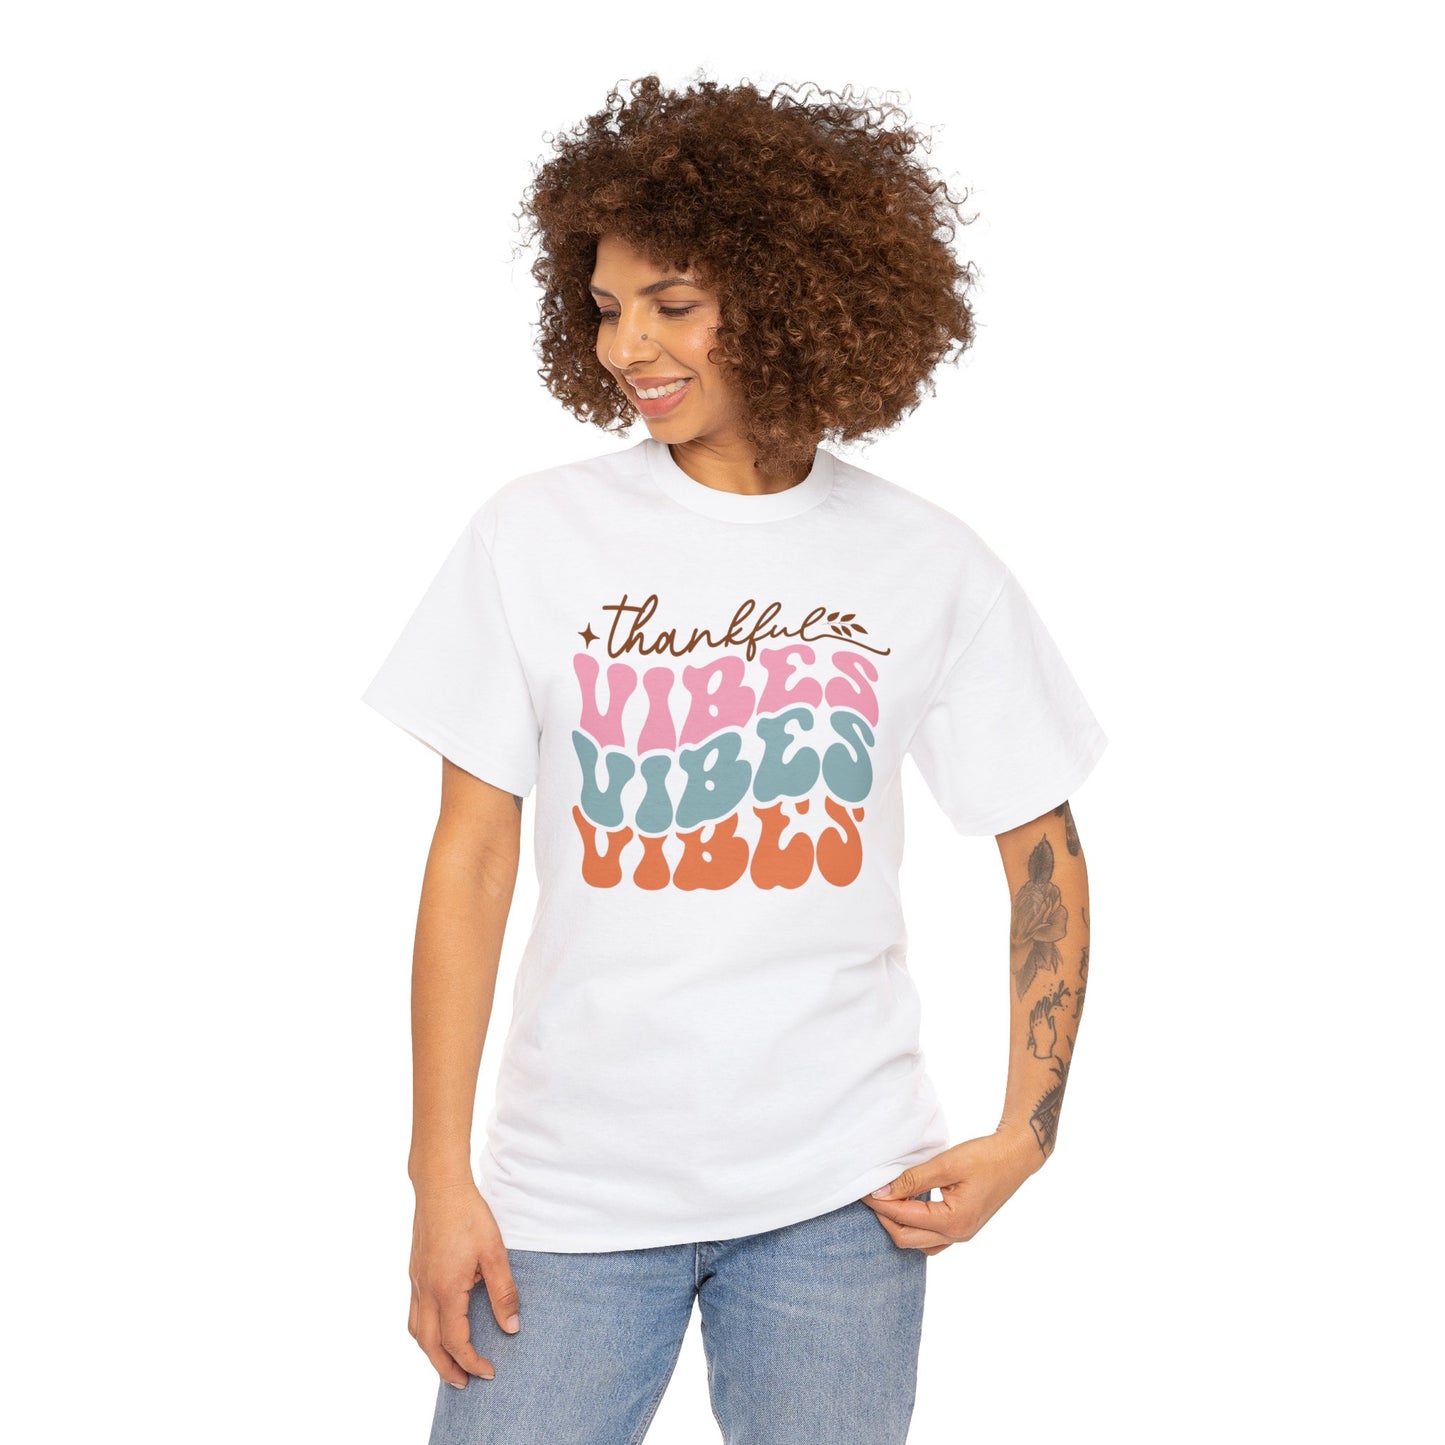 Thankful Vibes T-Shirt For Retro Thanksgiving T Shirt For Colorful Turkey Day TShirt